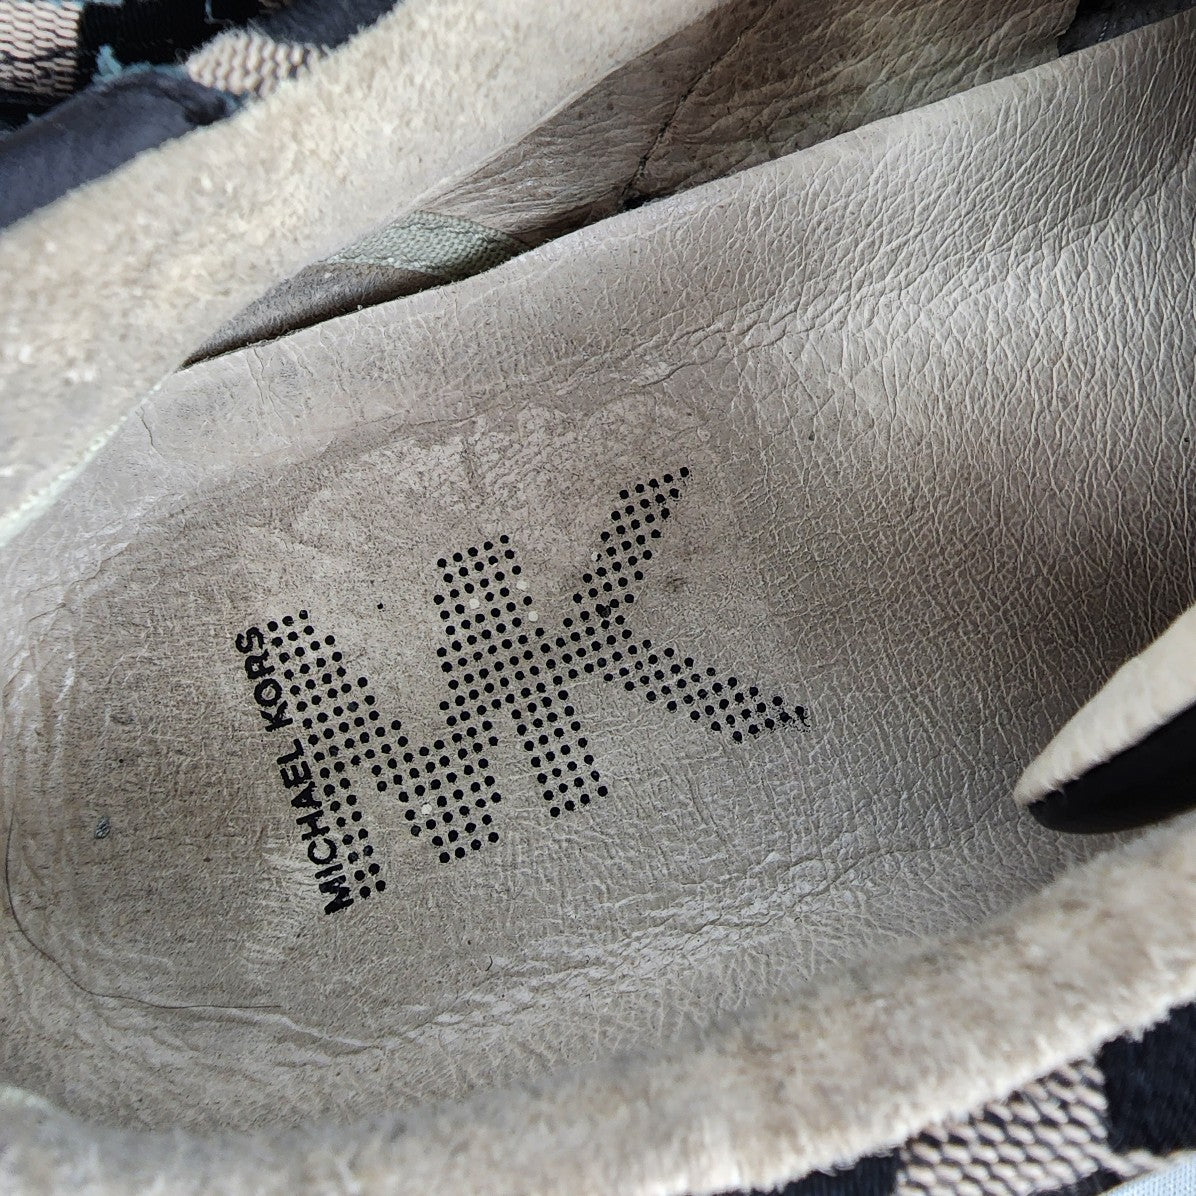 Michael Kors Black Monogram Leather Sneakers Size 8